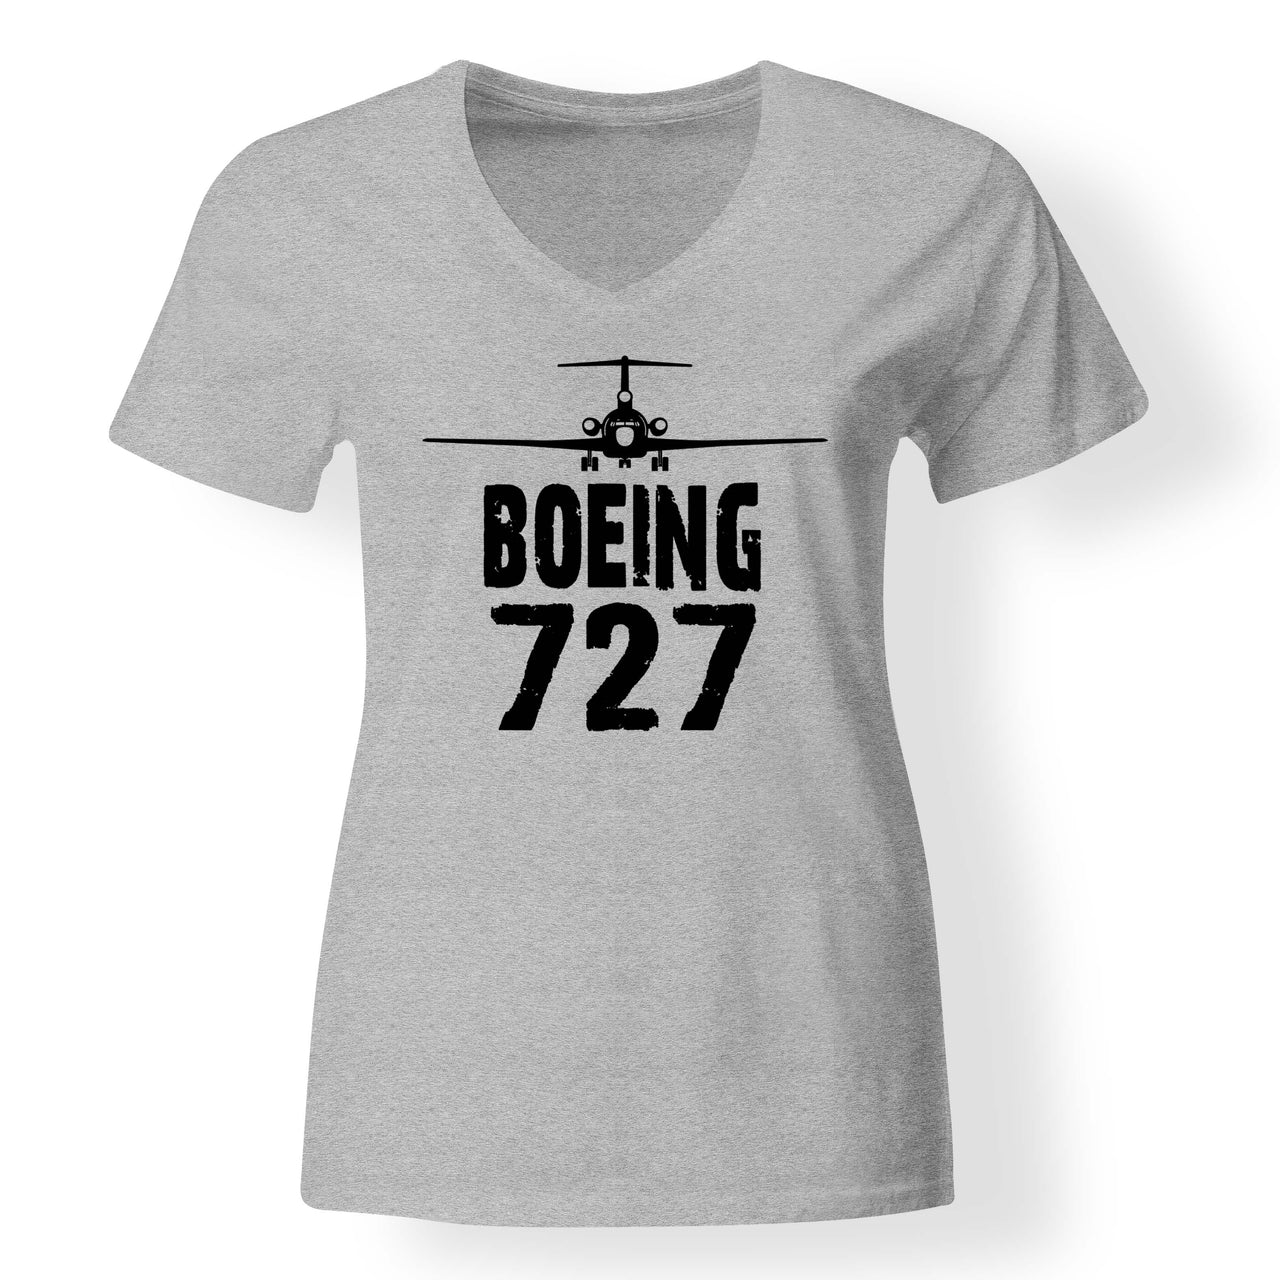 Boeing 727 & Plane Designed V-Neck T-Shirts